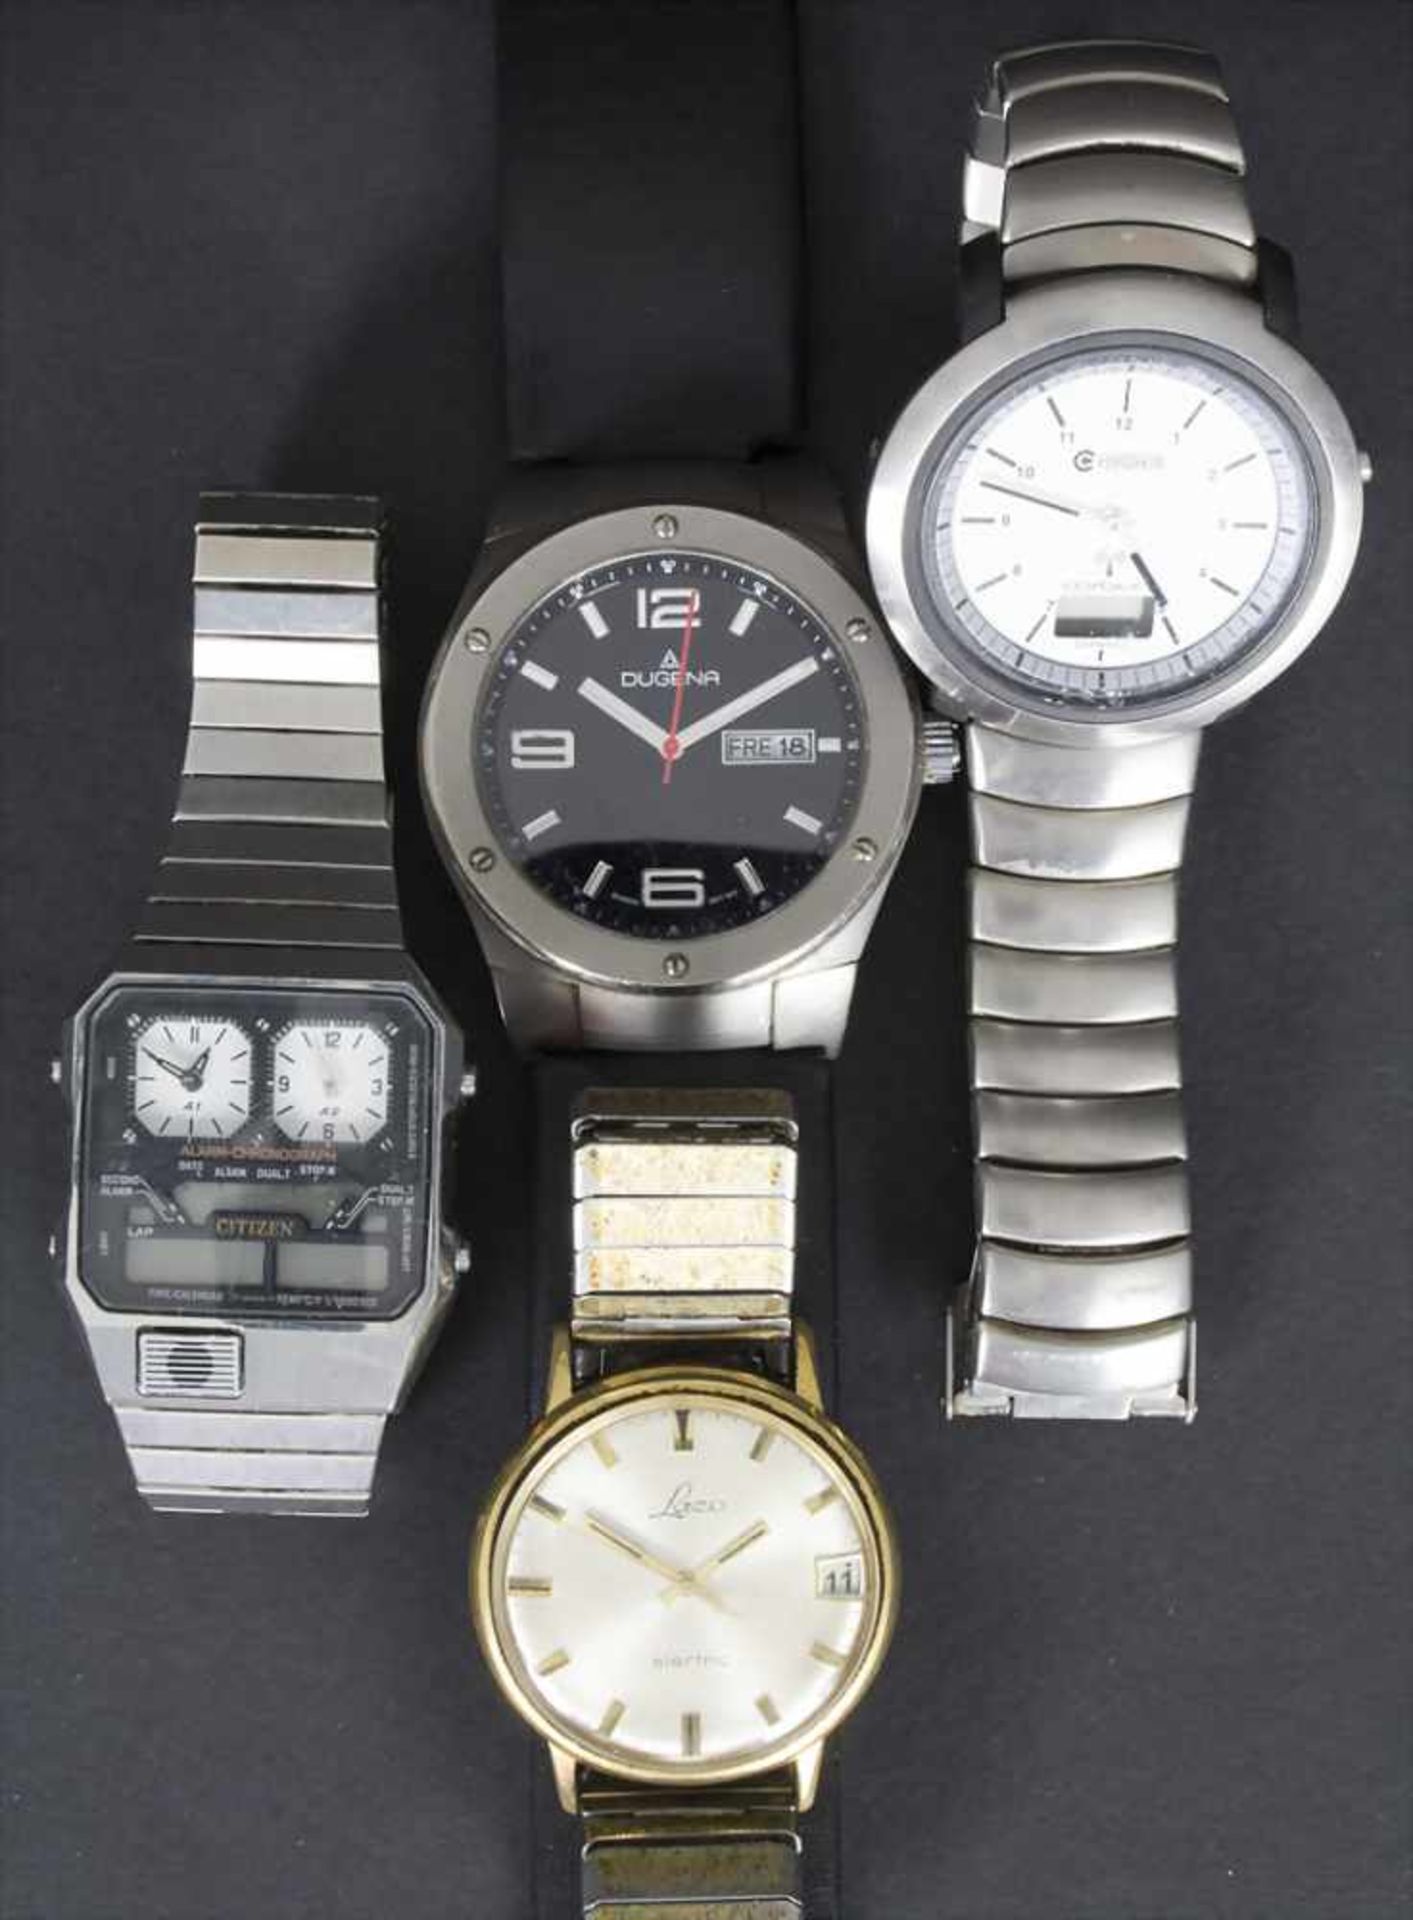 Konvolut 4 Armbanduhren / A set of 4 wrist watchesHersteller: Dugena, Laco, Eurochron, Citizen,